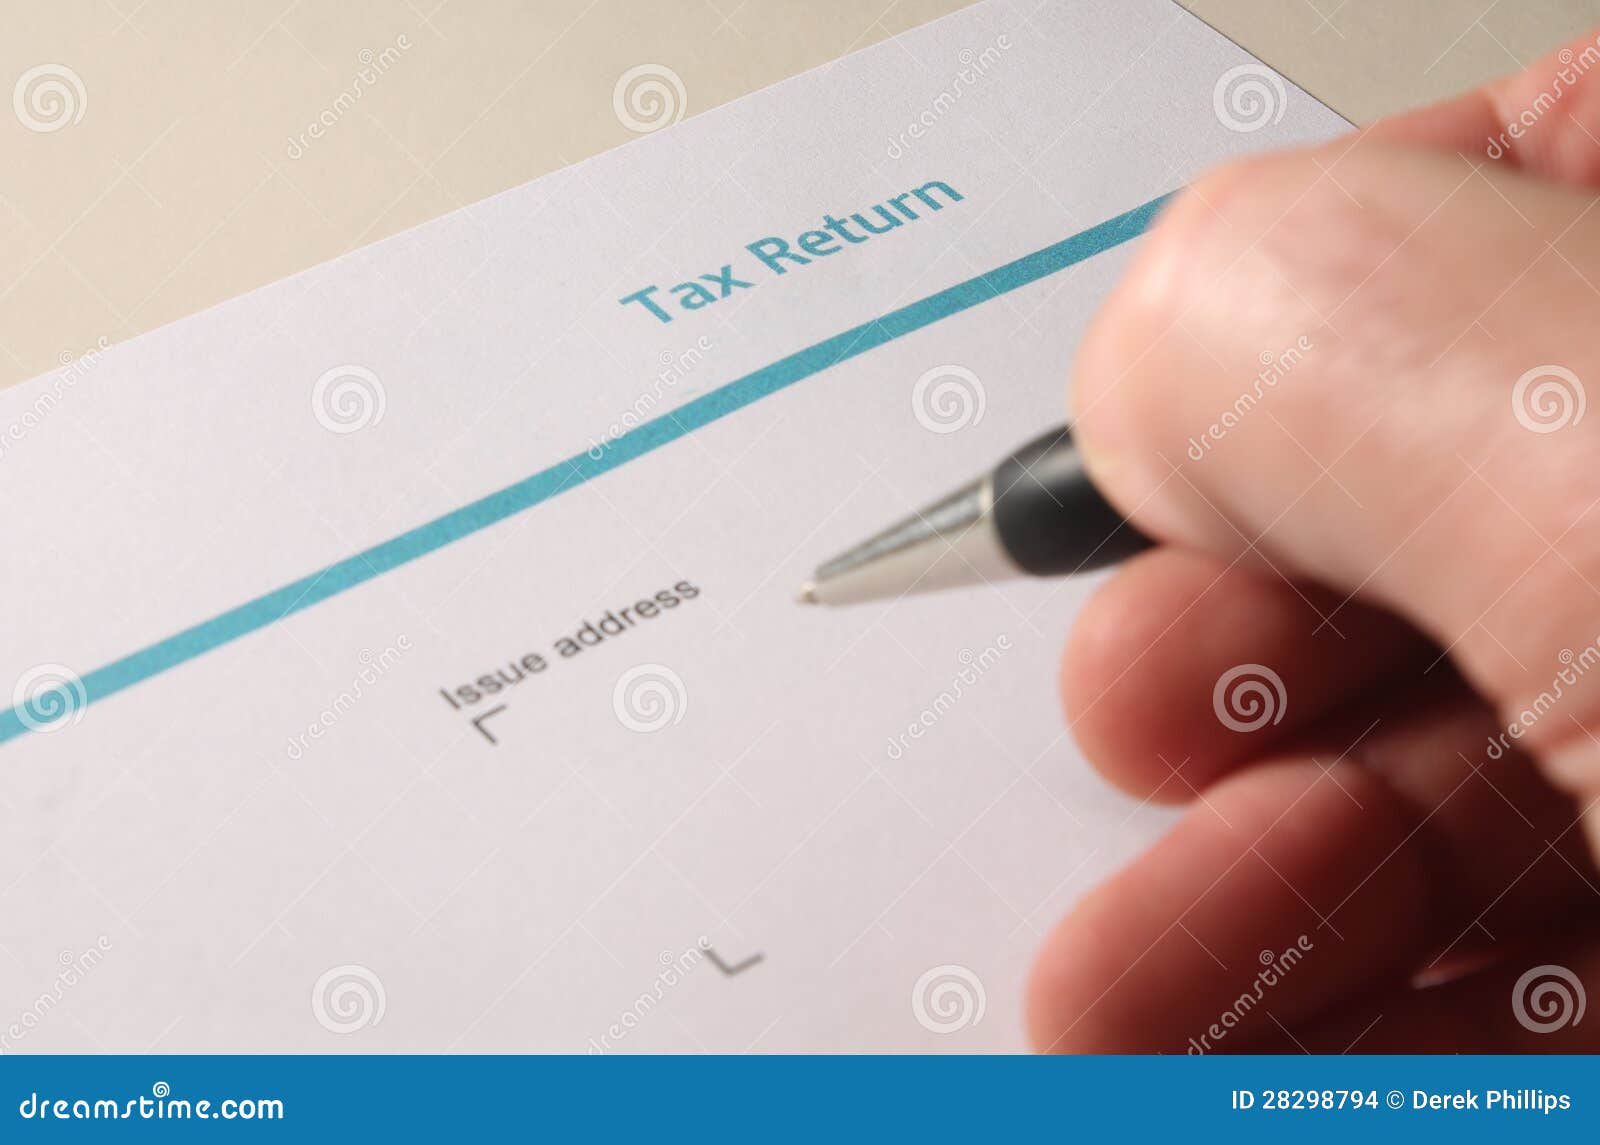 self assessment uk tax return form